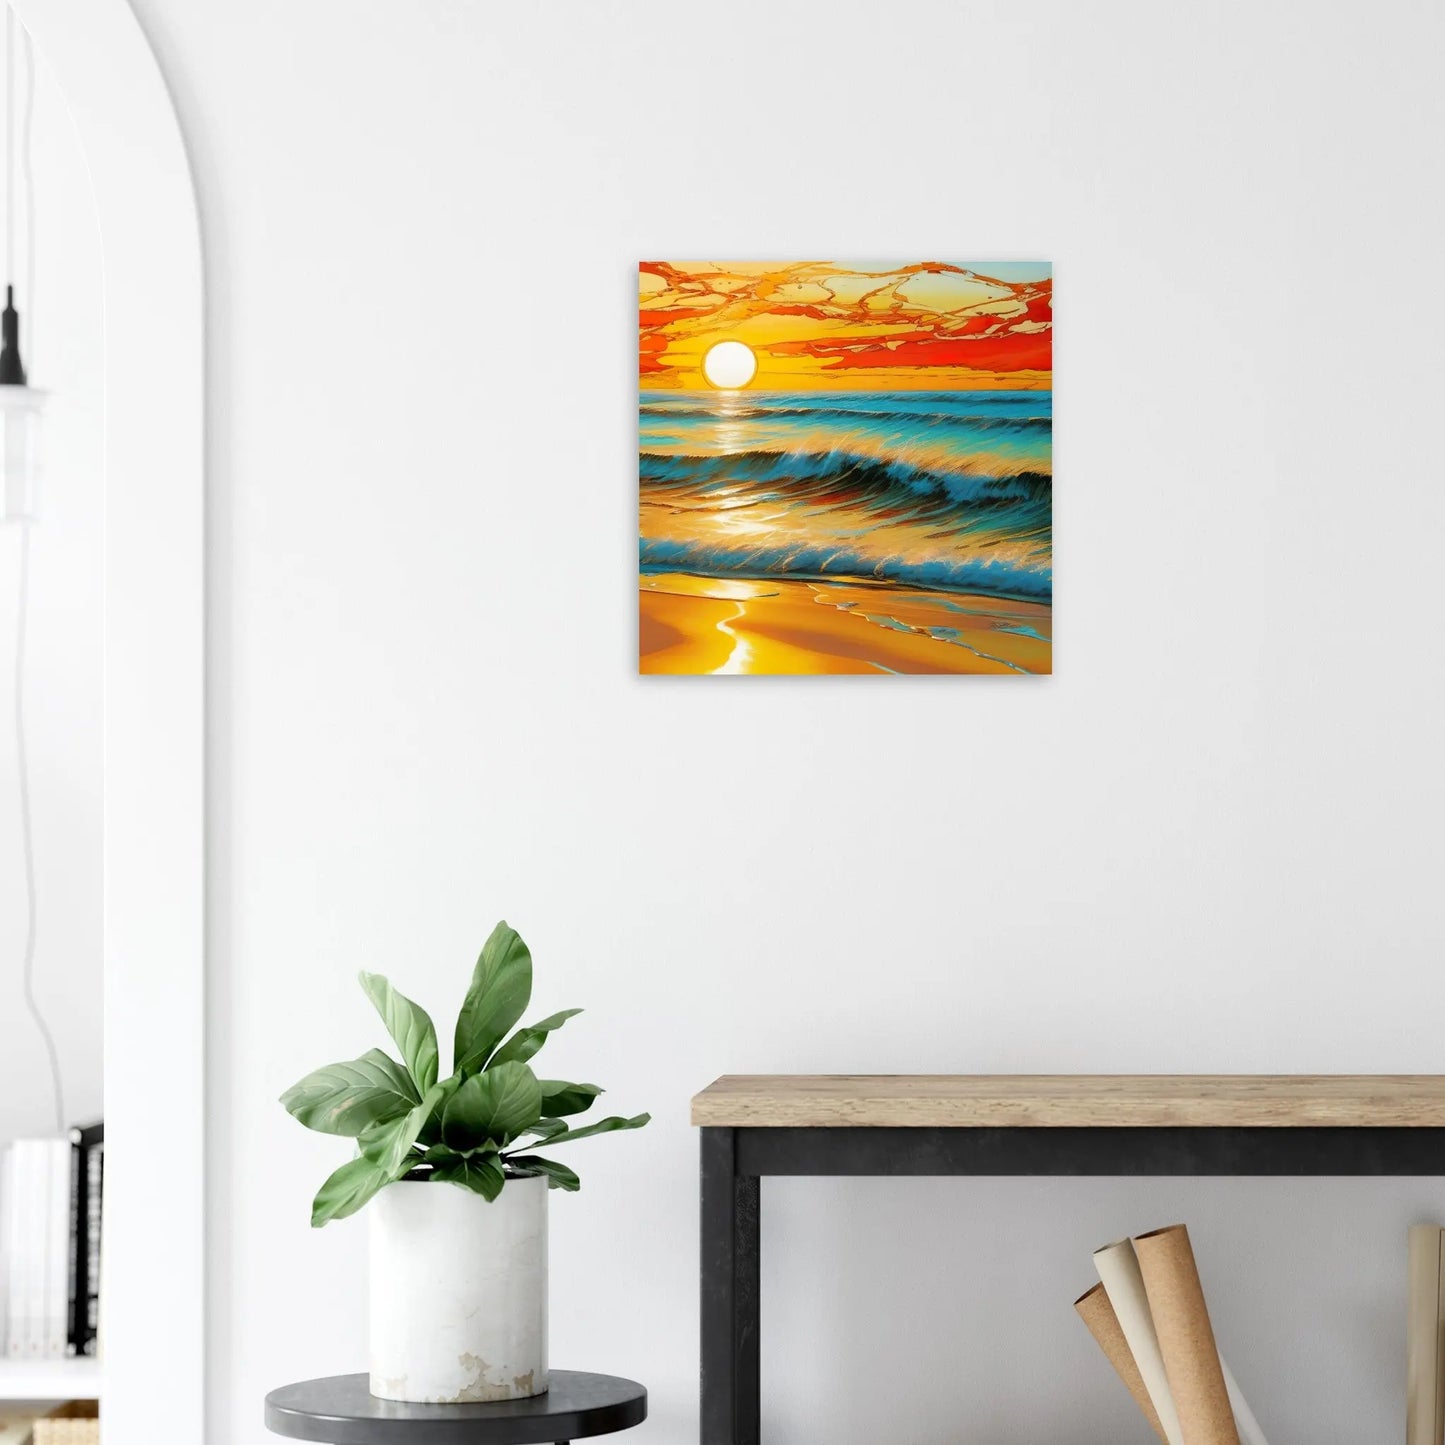 Moderner Forex-Druck - Kraftvolles Meer - Digitaler Stil, KI-Kunst - RolConArt, Landschaften, 50x50-cm-20x20-Weiß